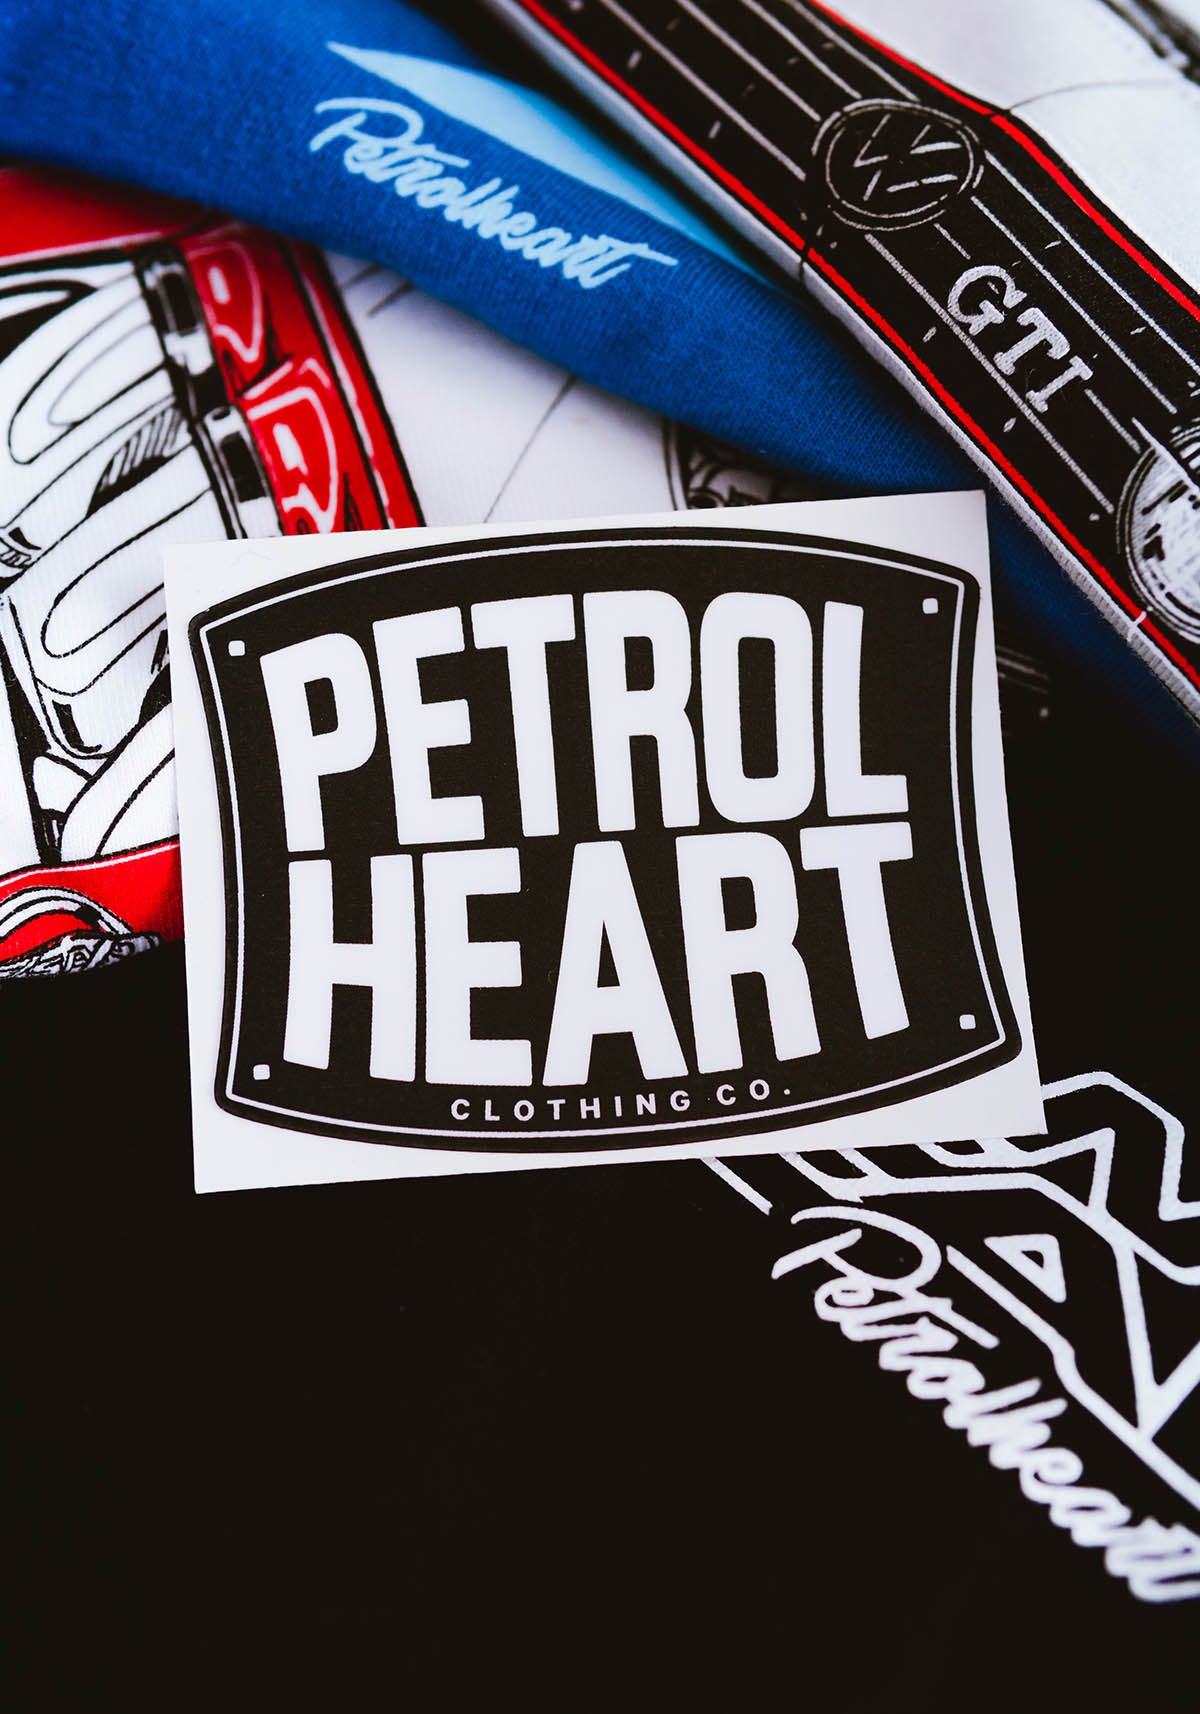 Petrolheart Badge | Sticker